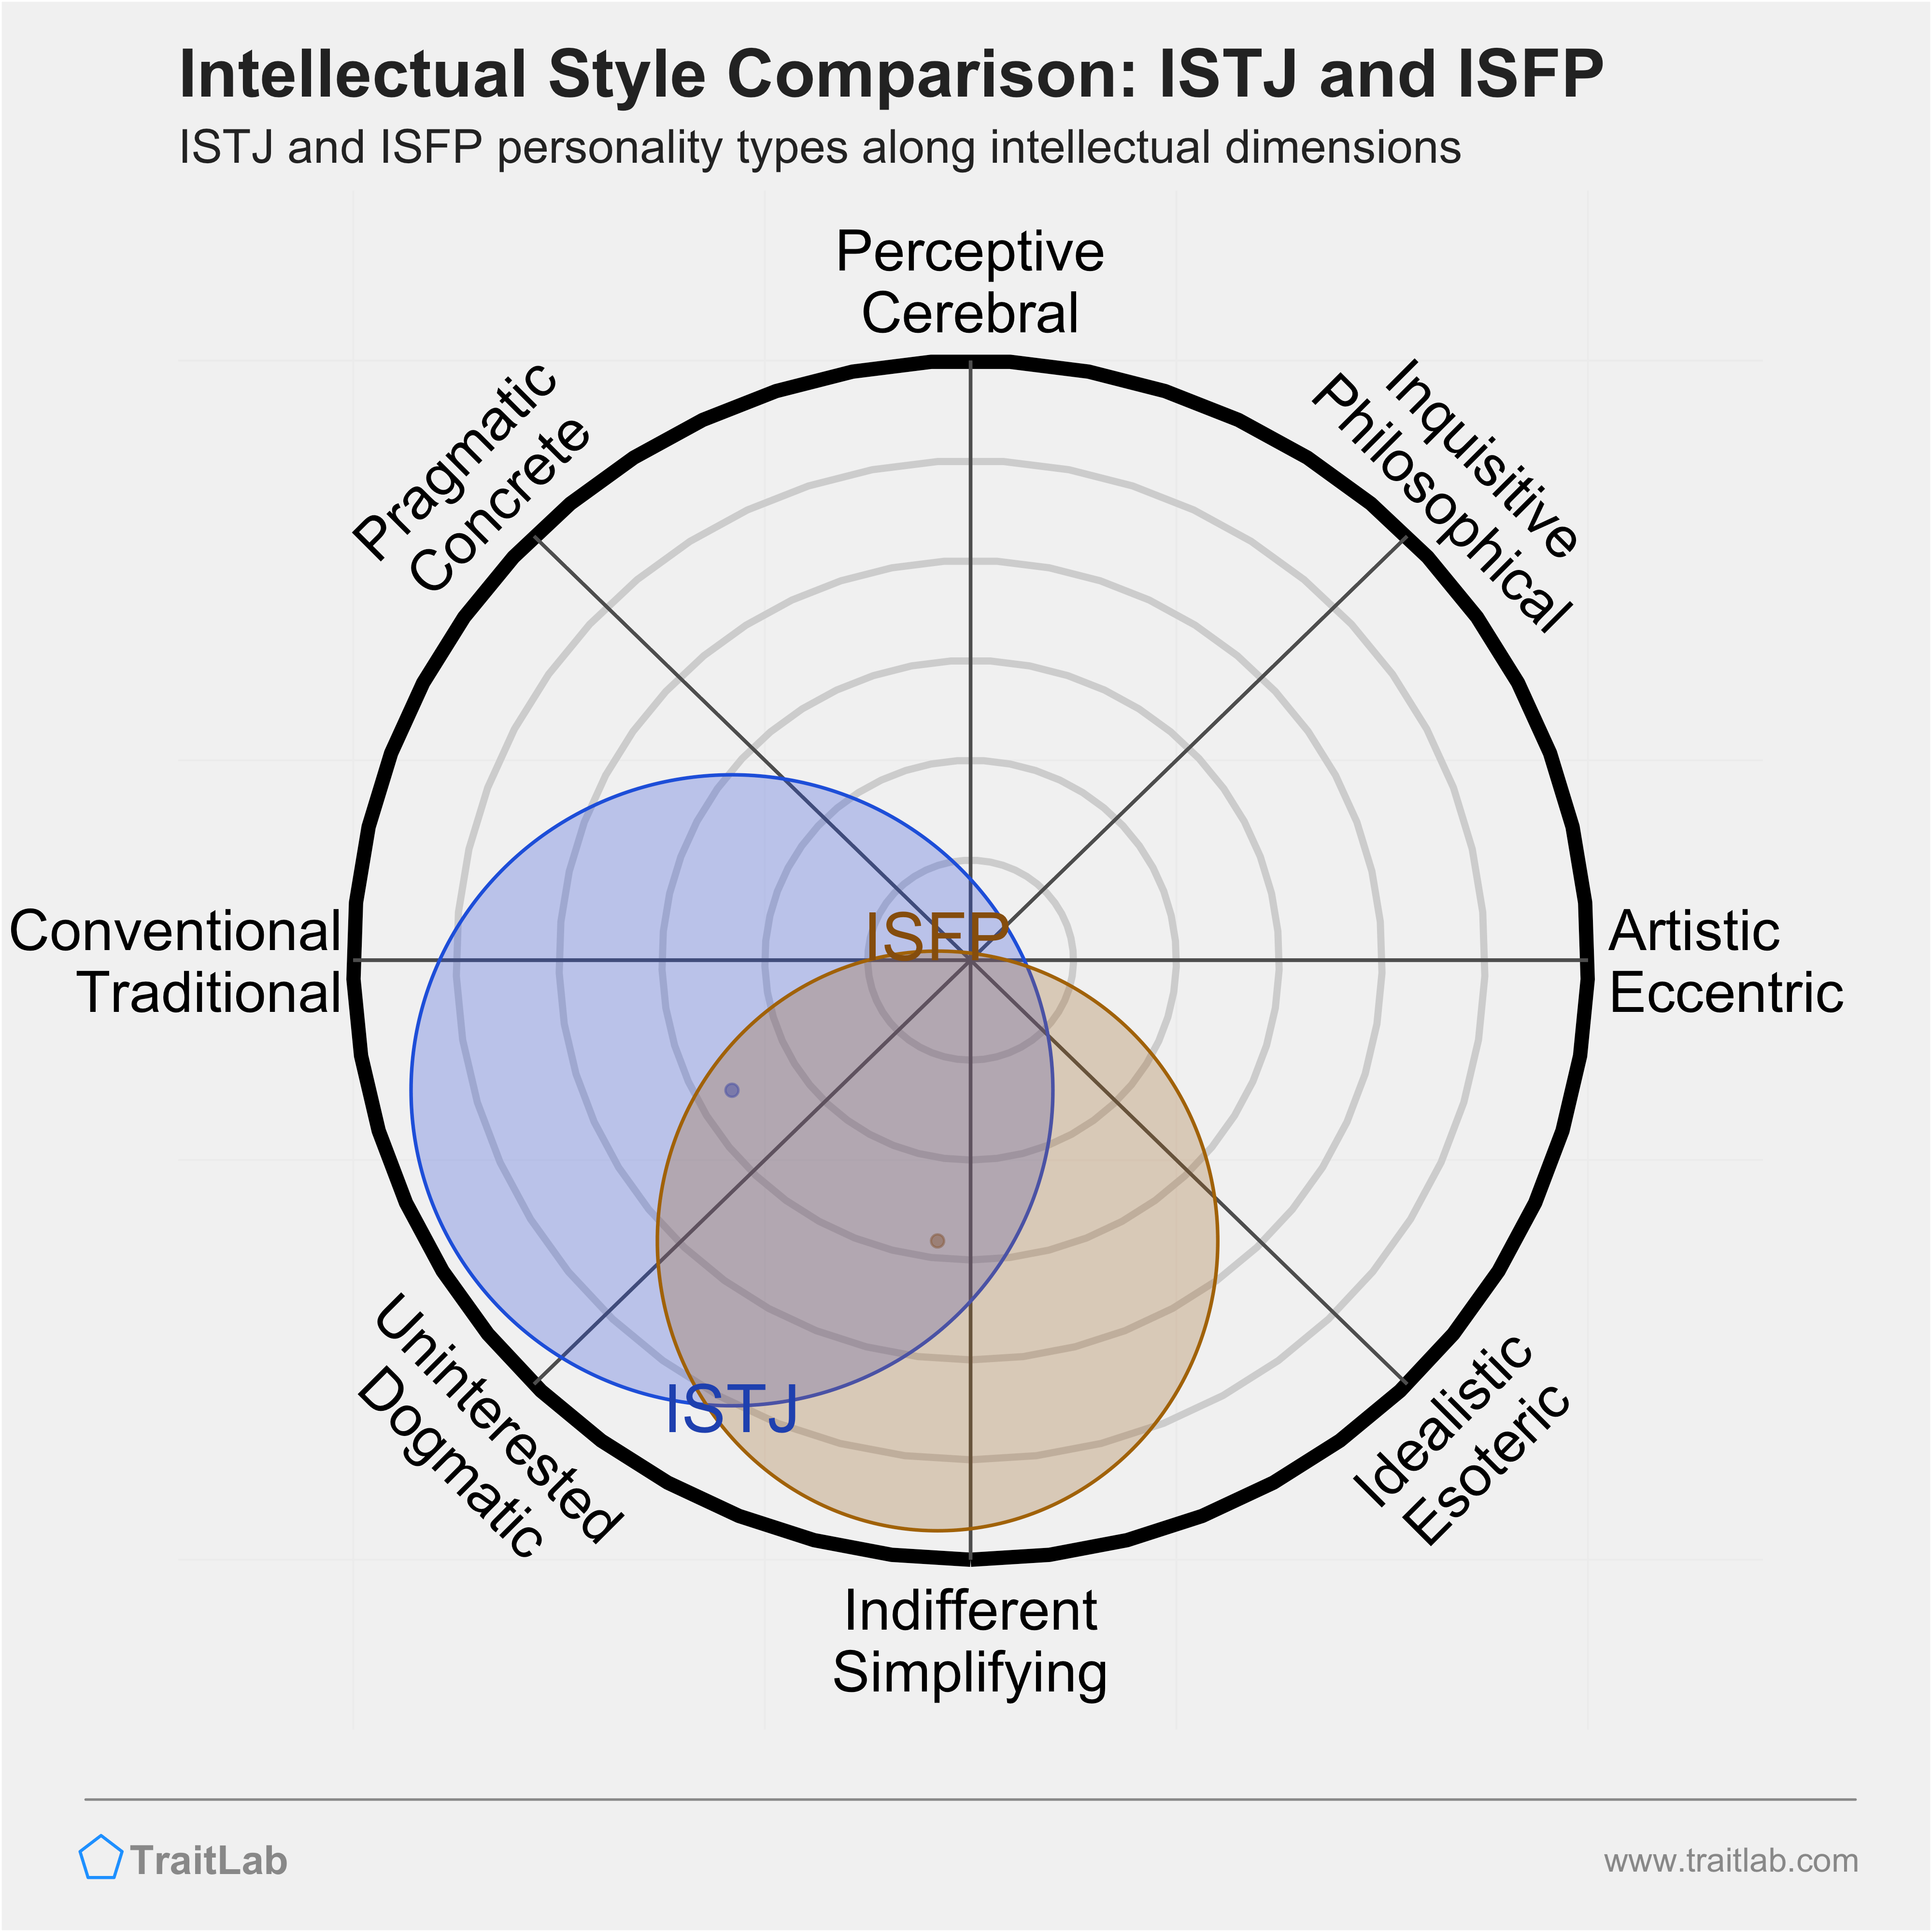 ISTJ and ISFP comparison across intellectual dimensions